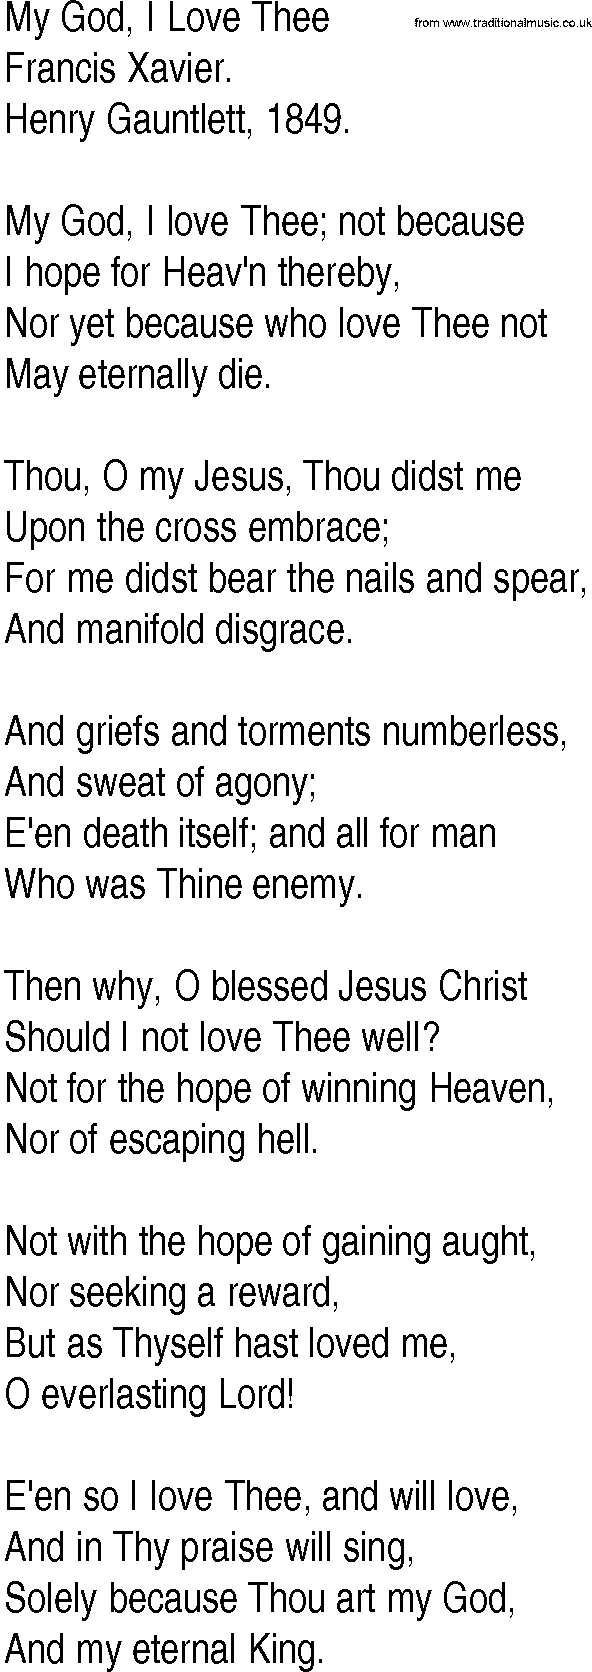 Hymn and Gospel Song: My God, I Love Thee by Francis Xavier lyrics